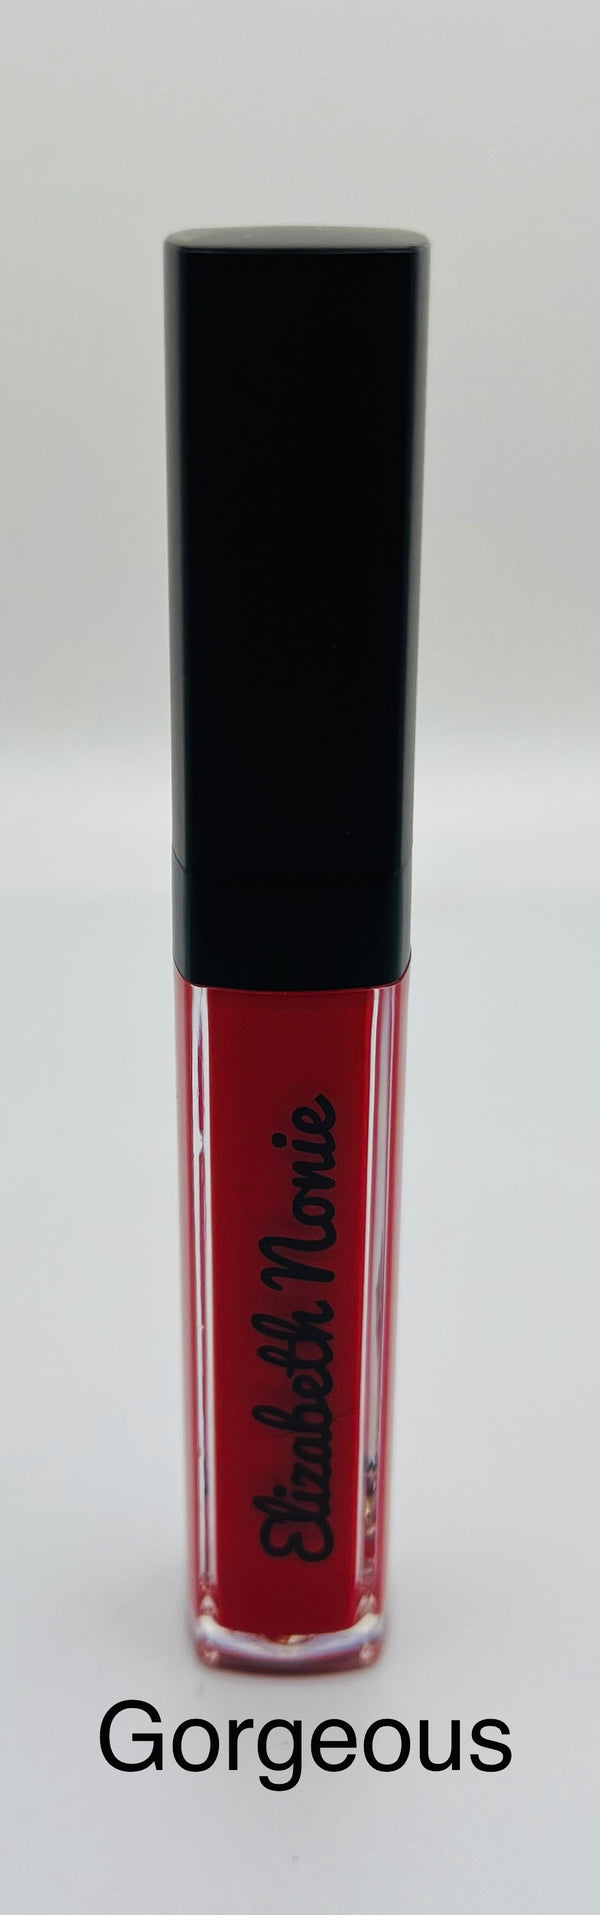 Gorgeous Matte Liquid Lipstick